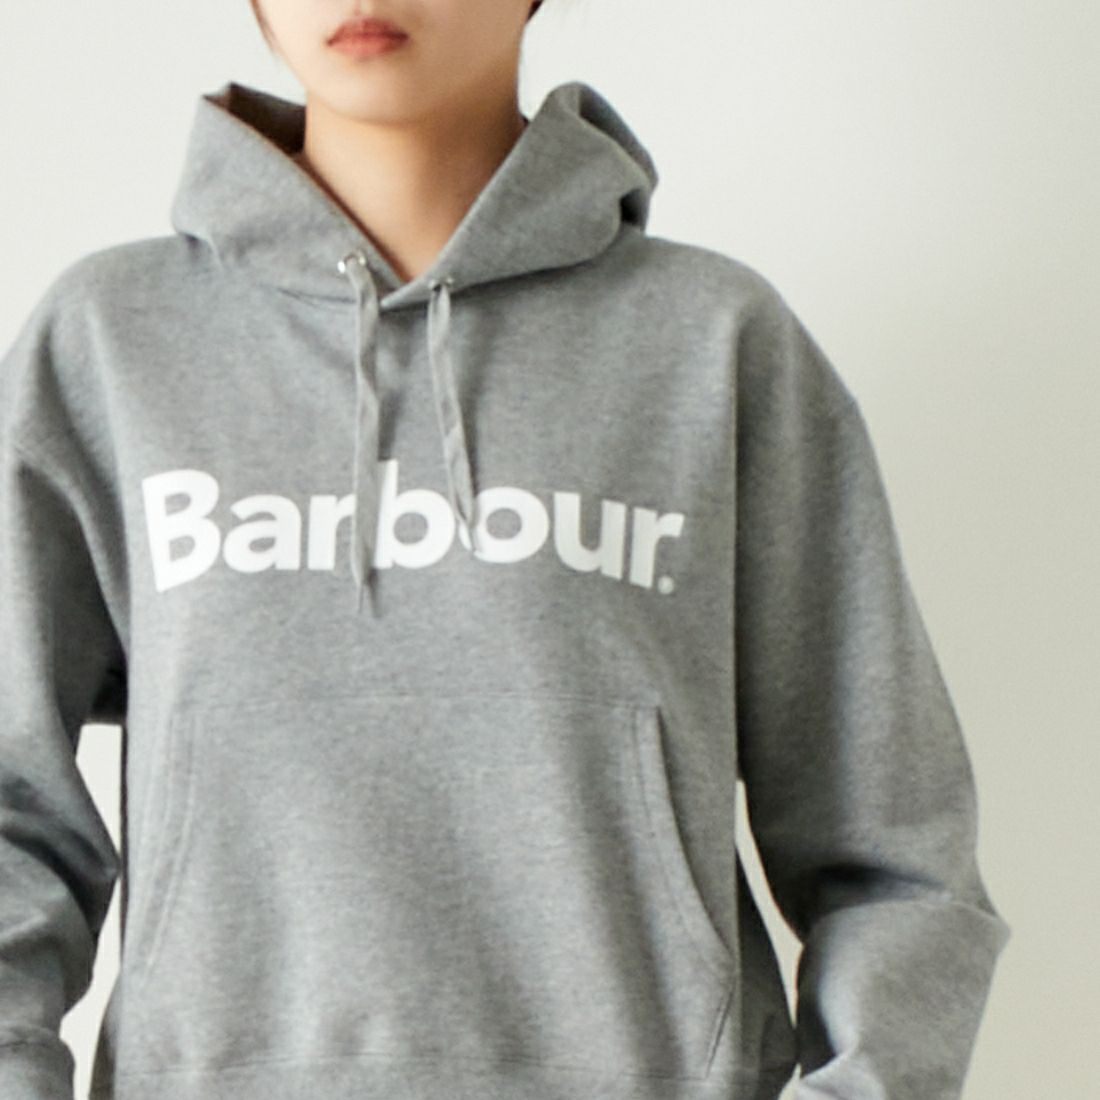 Barbour [バブアー] BARBOURロゴ スウェットフードパーカー [241LOLG002] H.GREY